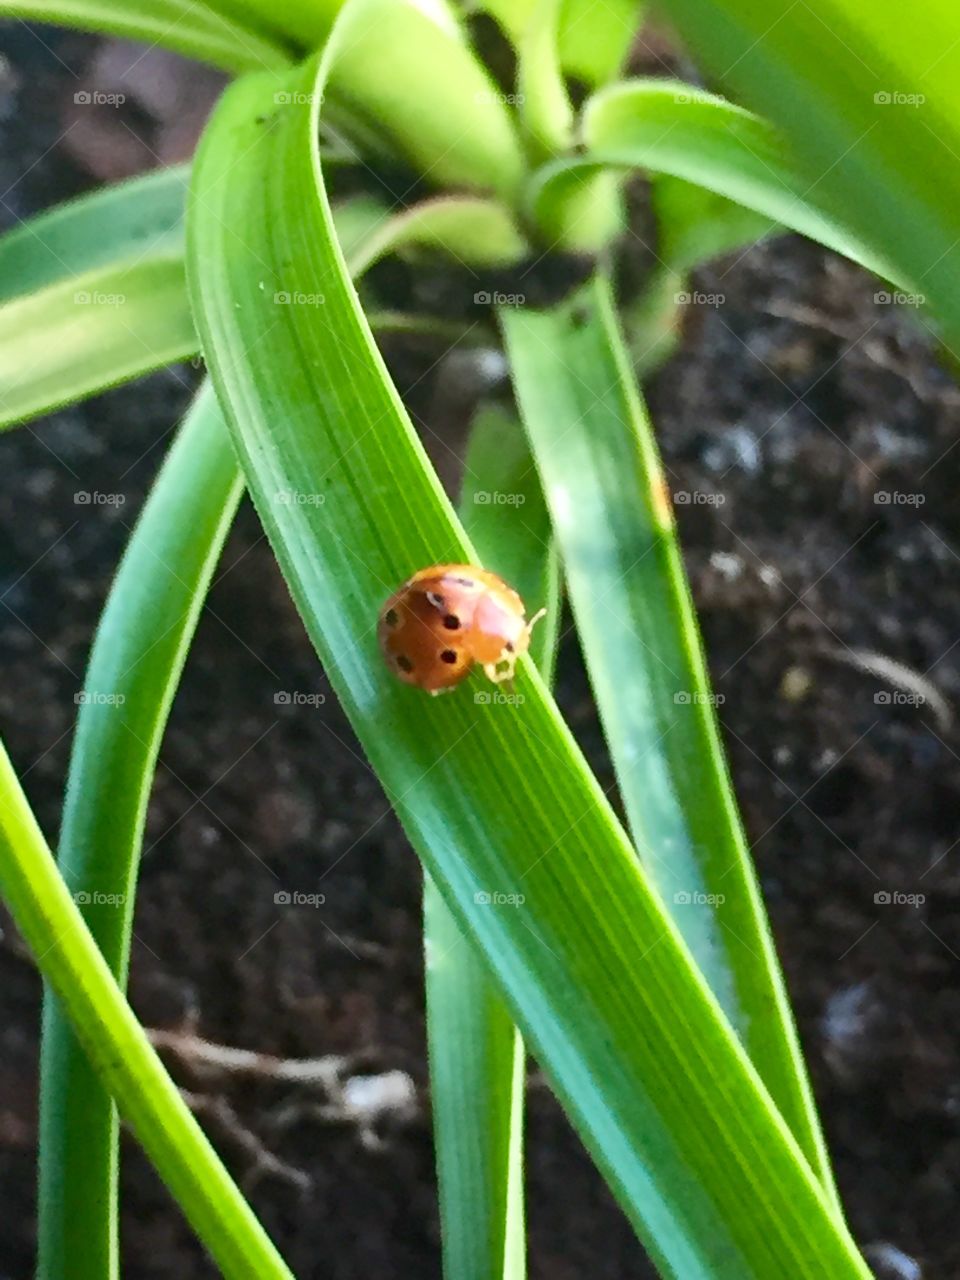 Lady bug on plant 